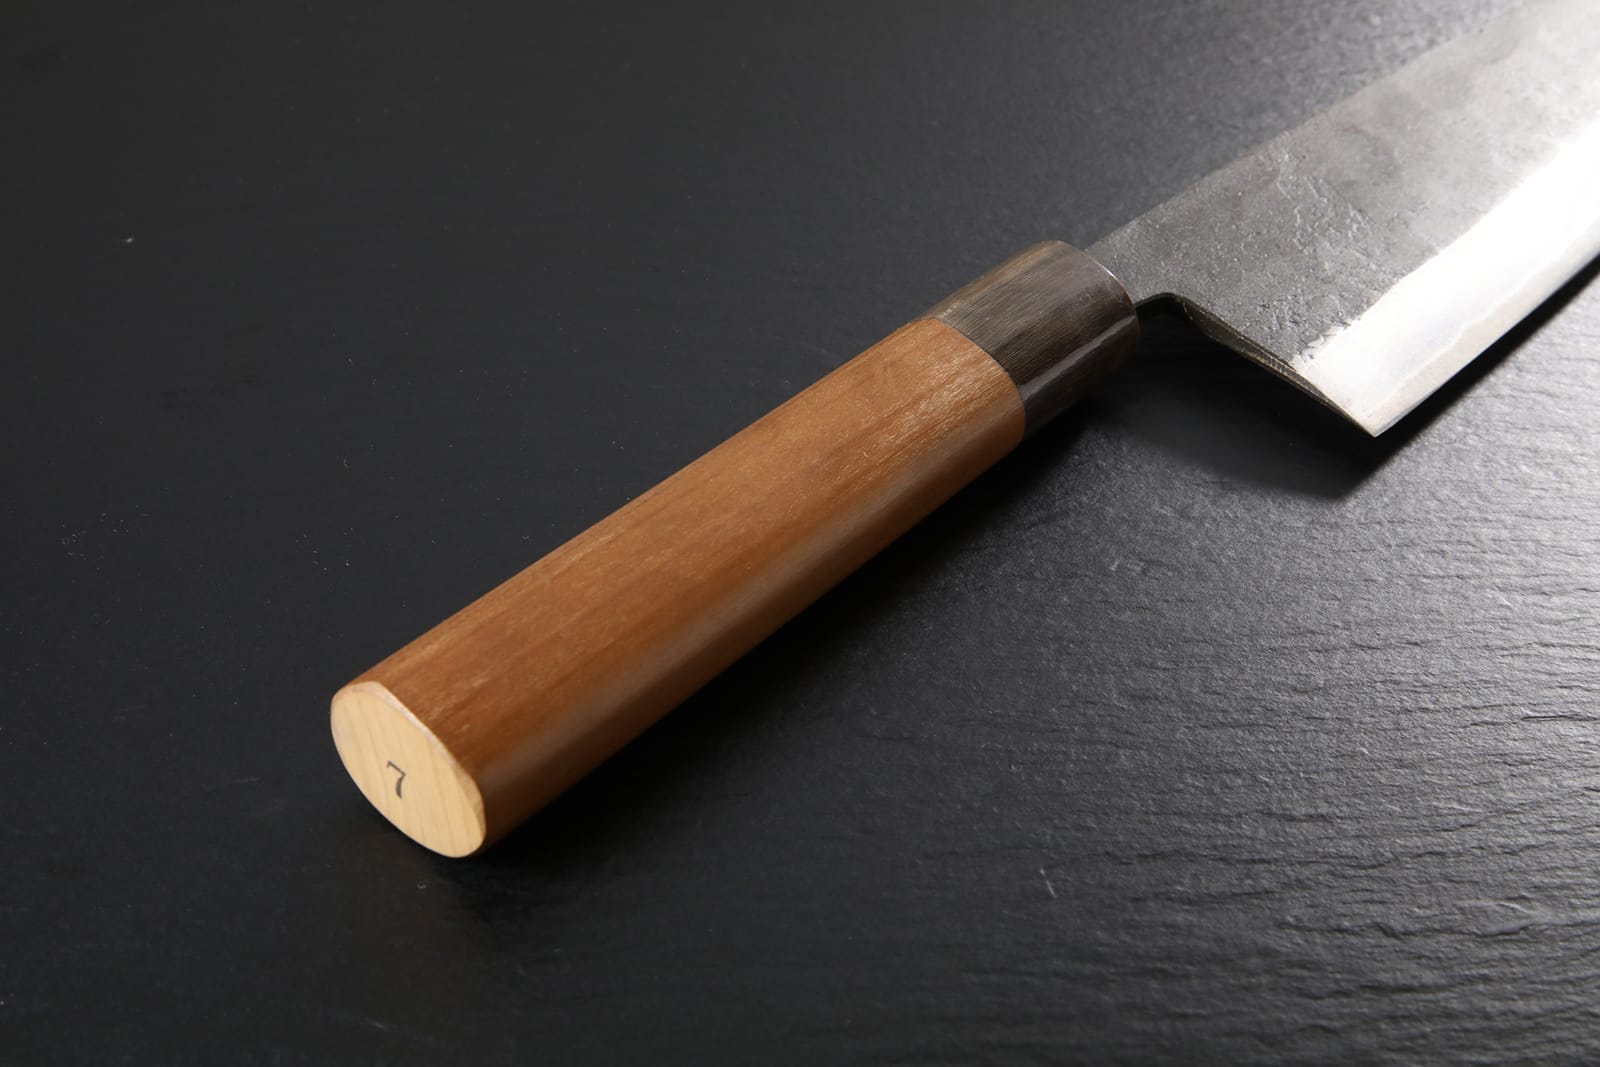 Japanese Salmon cutting knife [Kurouchi], Deba Knife, Japanese Knives